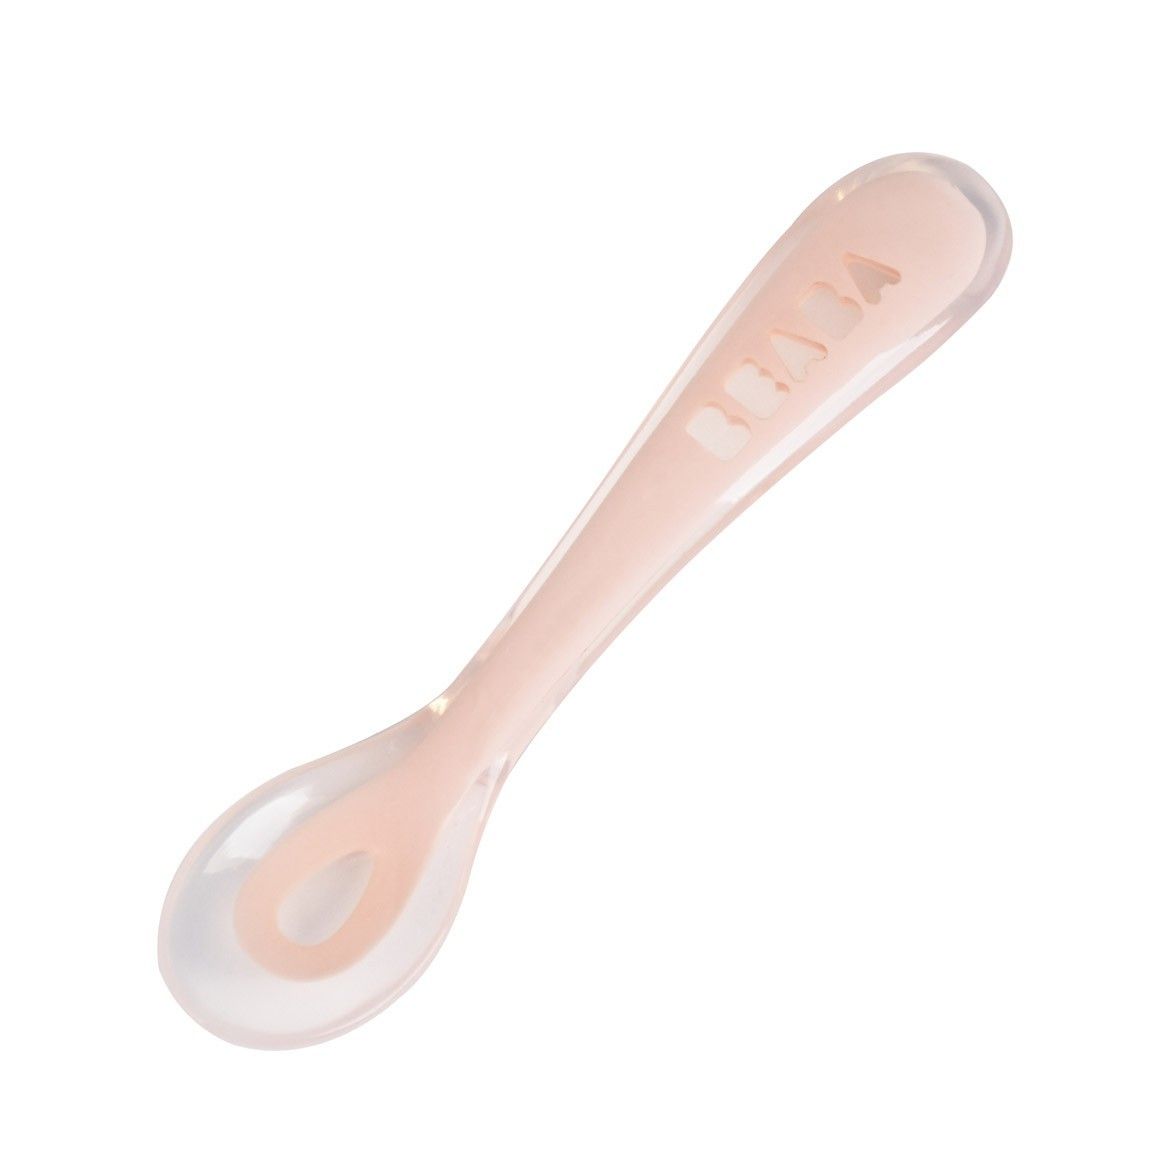 фото Эргономическая beaba ложка 2 2nd age silicone spoon pink 913425